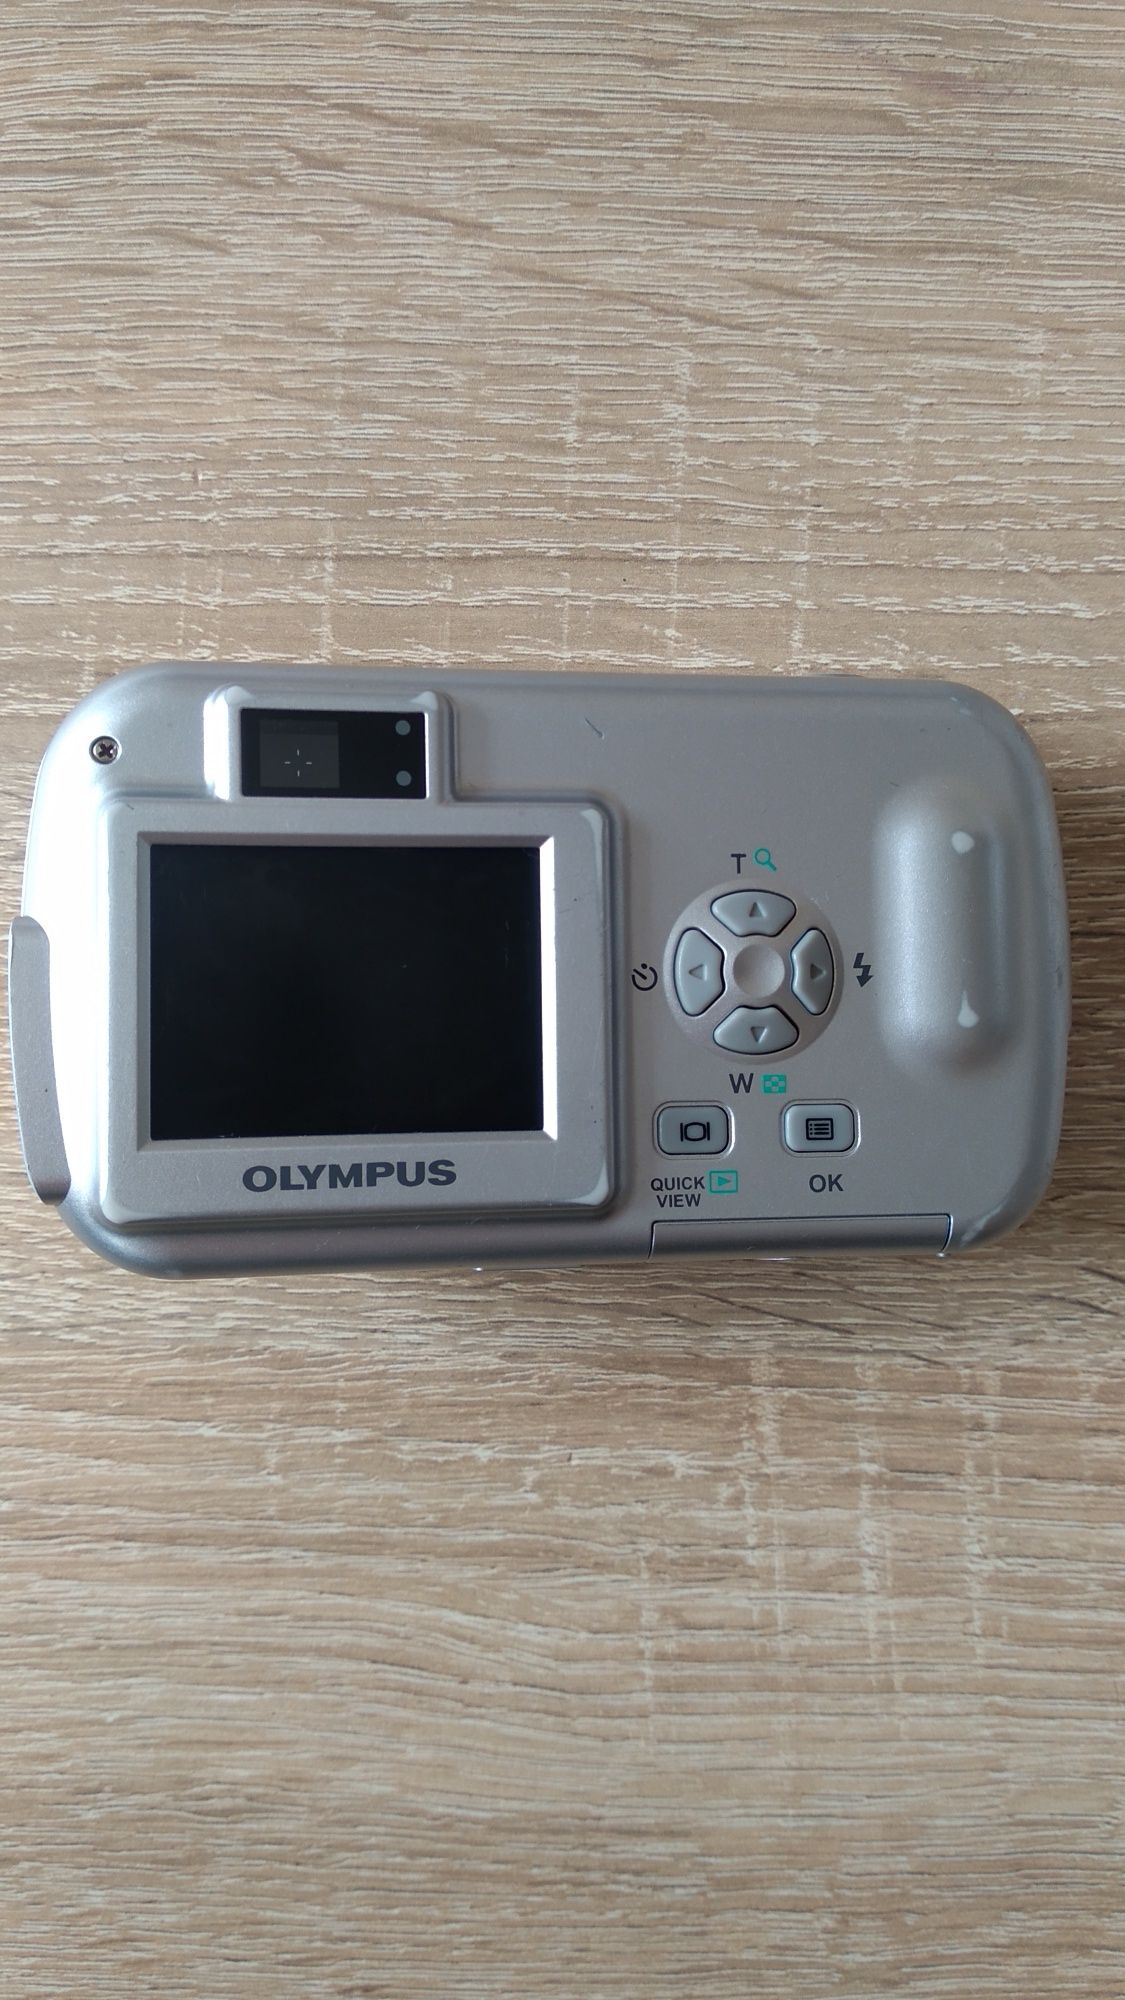 Цифровой фотоаппарат Olympus digital camera D-390 олимпус 2000-х годов